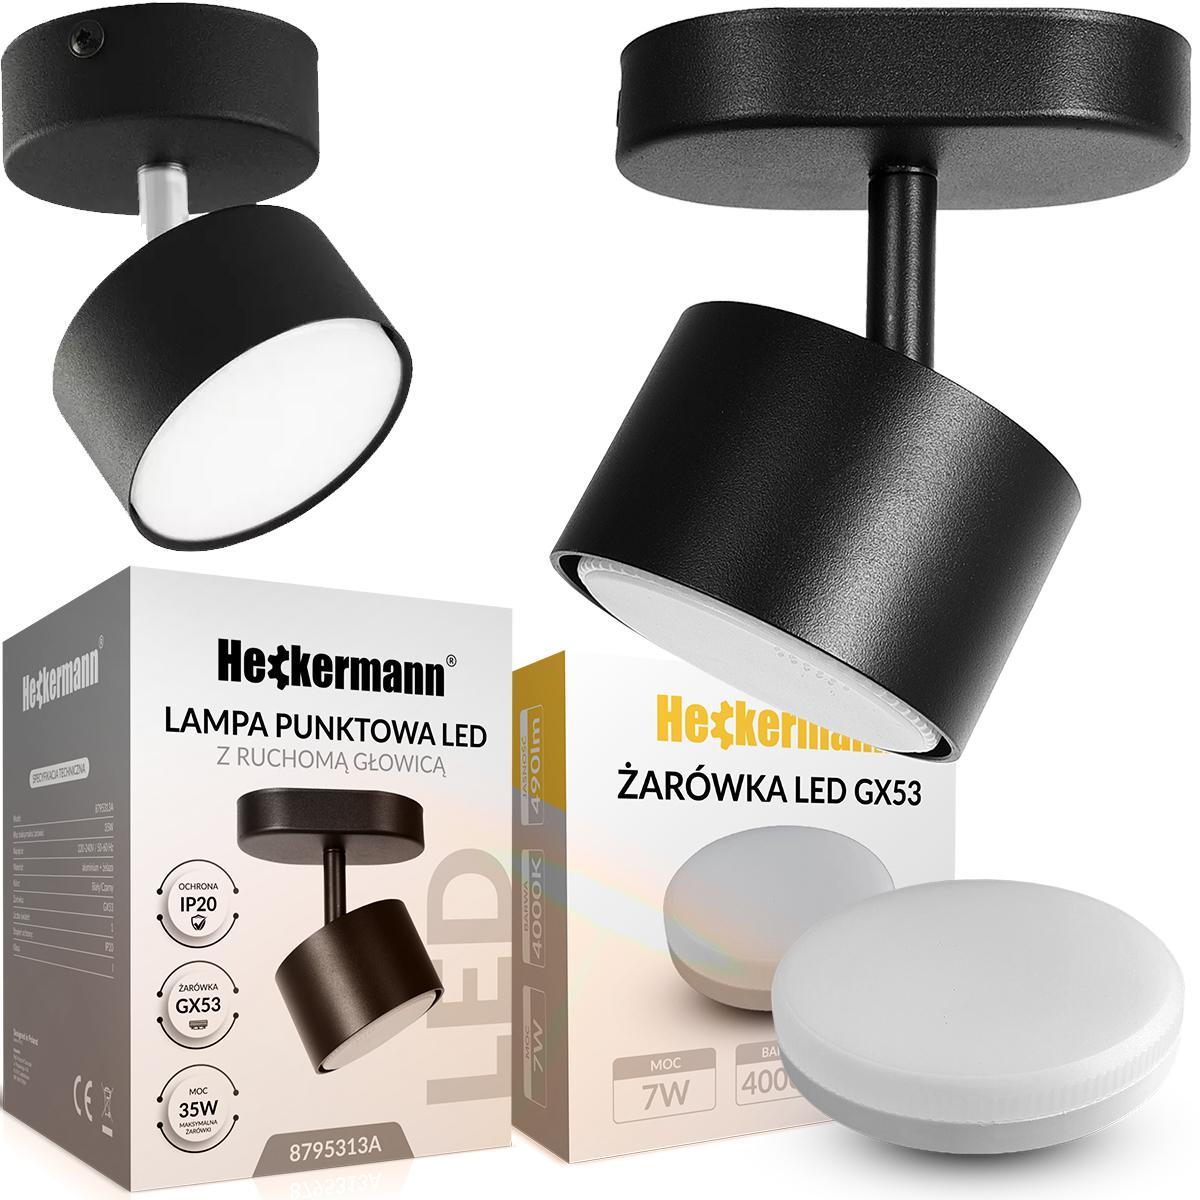 Lampa sufitowa punktowa LED Heckermann 8795313A Czarna 1x głowica + 1x Żarówka LED GX53 7W Neutral 0 Full Screen